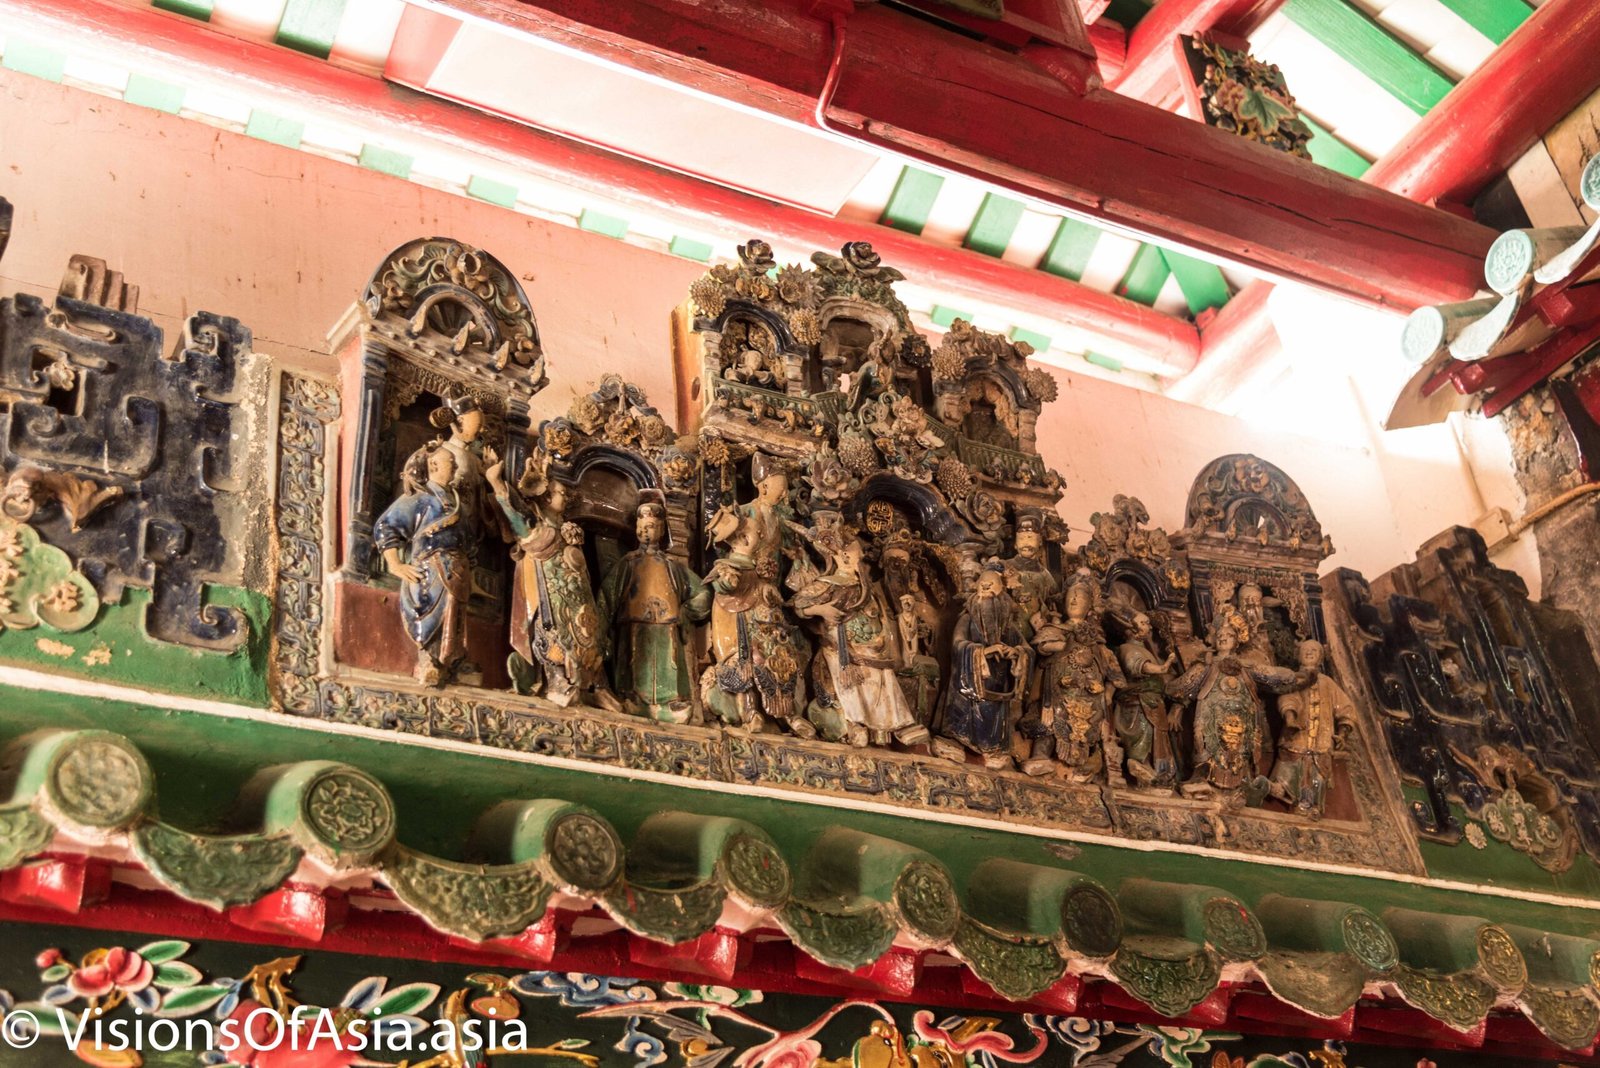 Ornaments inside the Tin Hau temple (second side)